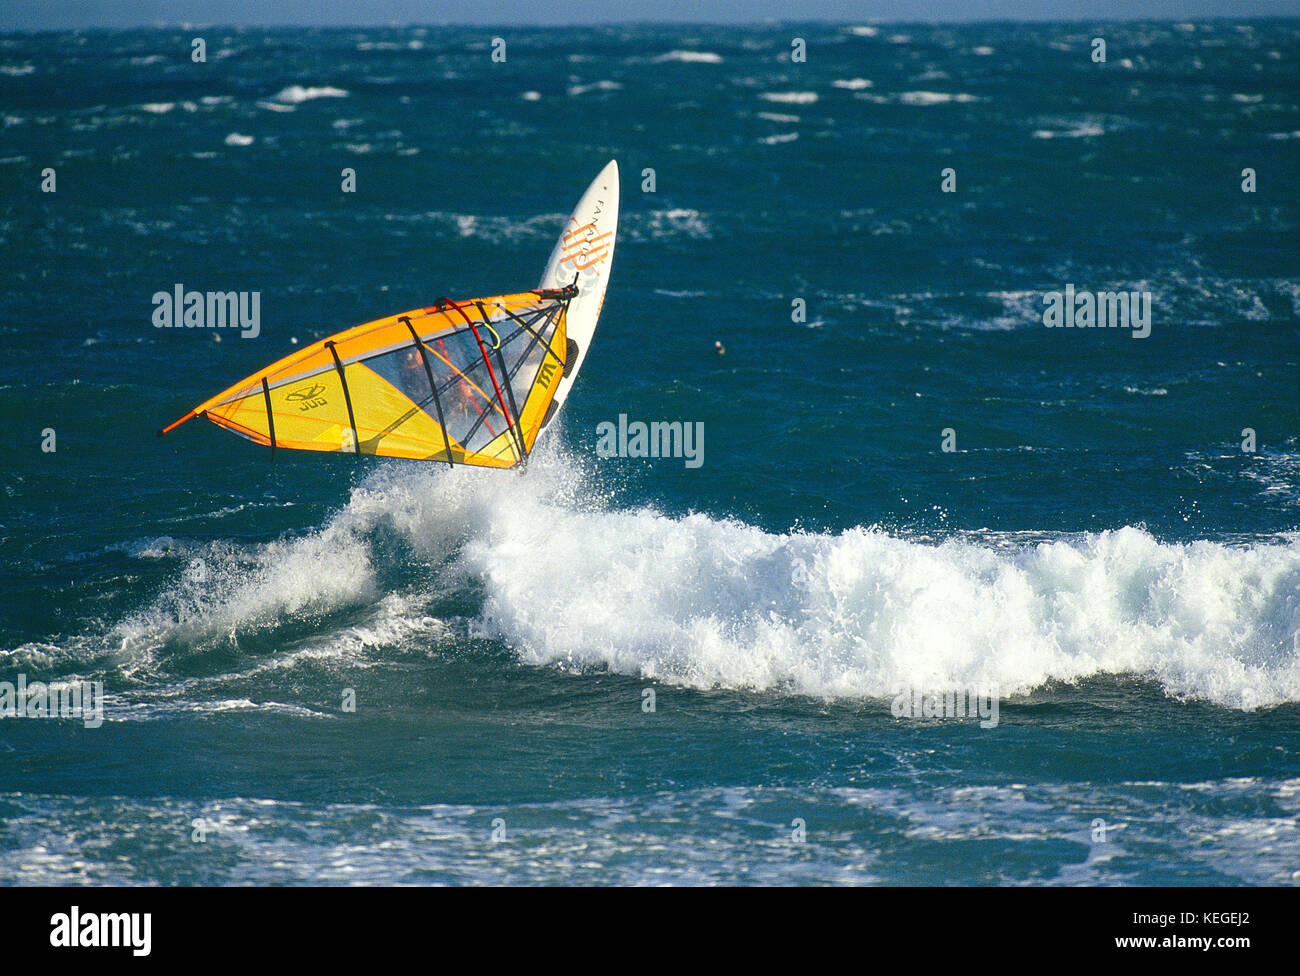 Sport. Man on sailboard wave hopping. Stock Photo